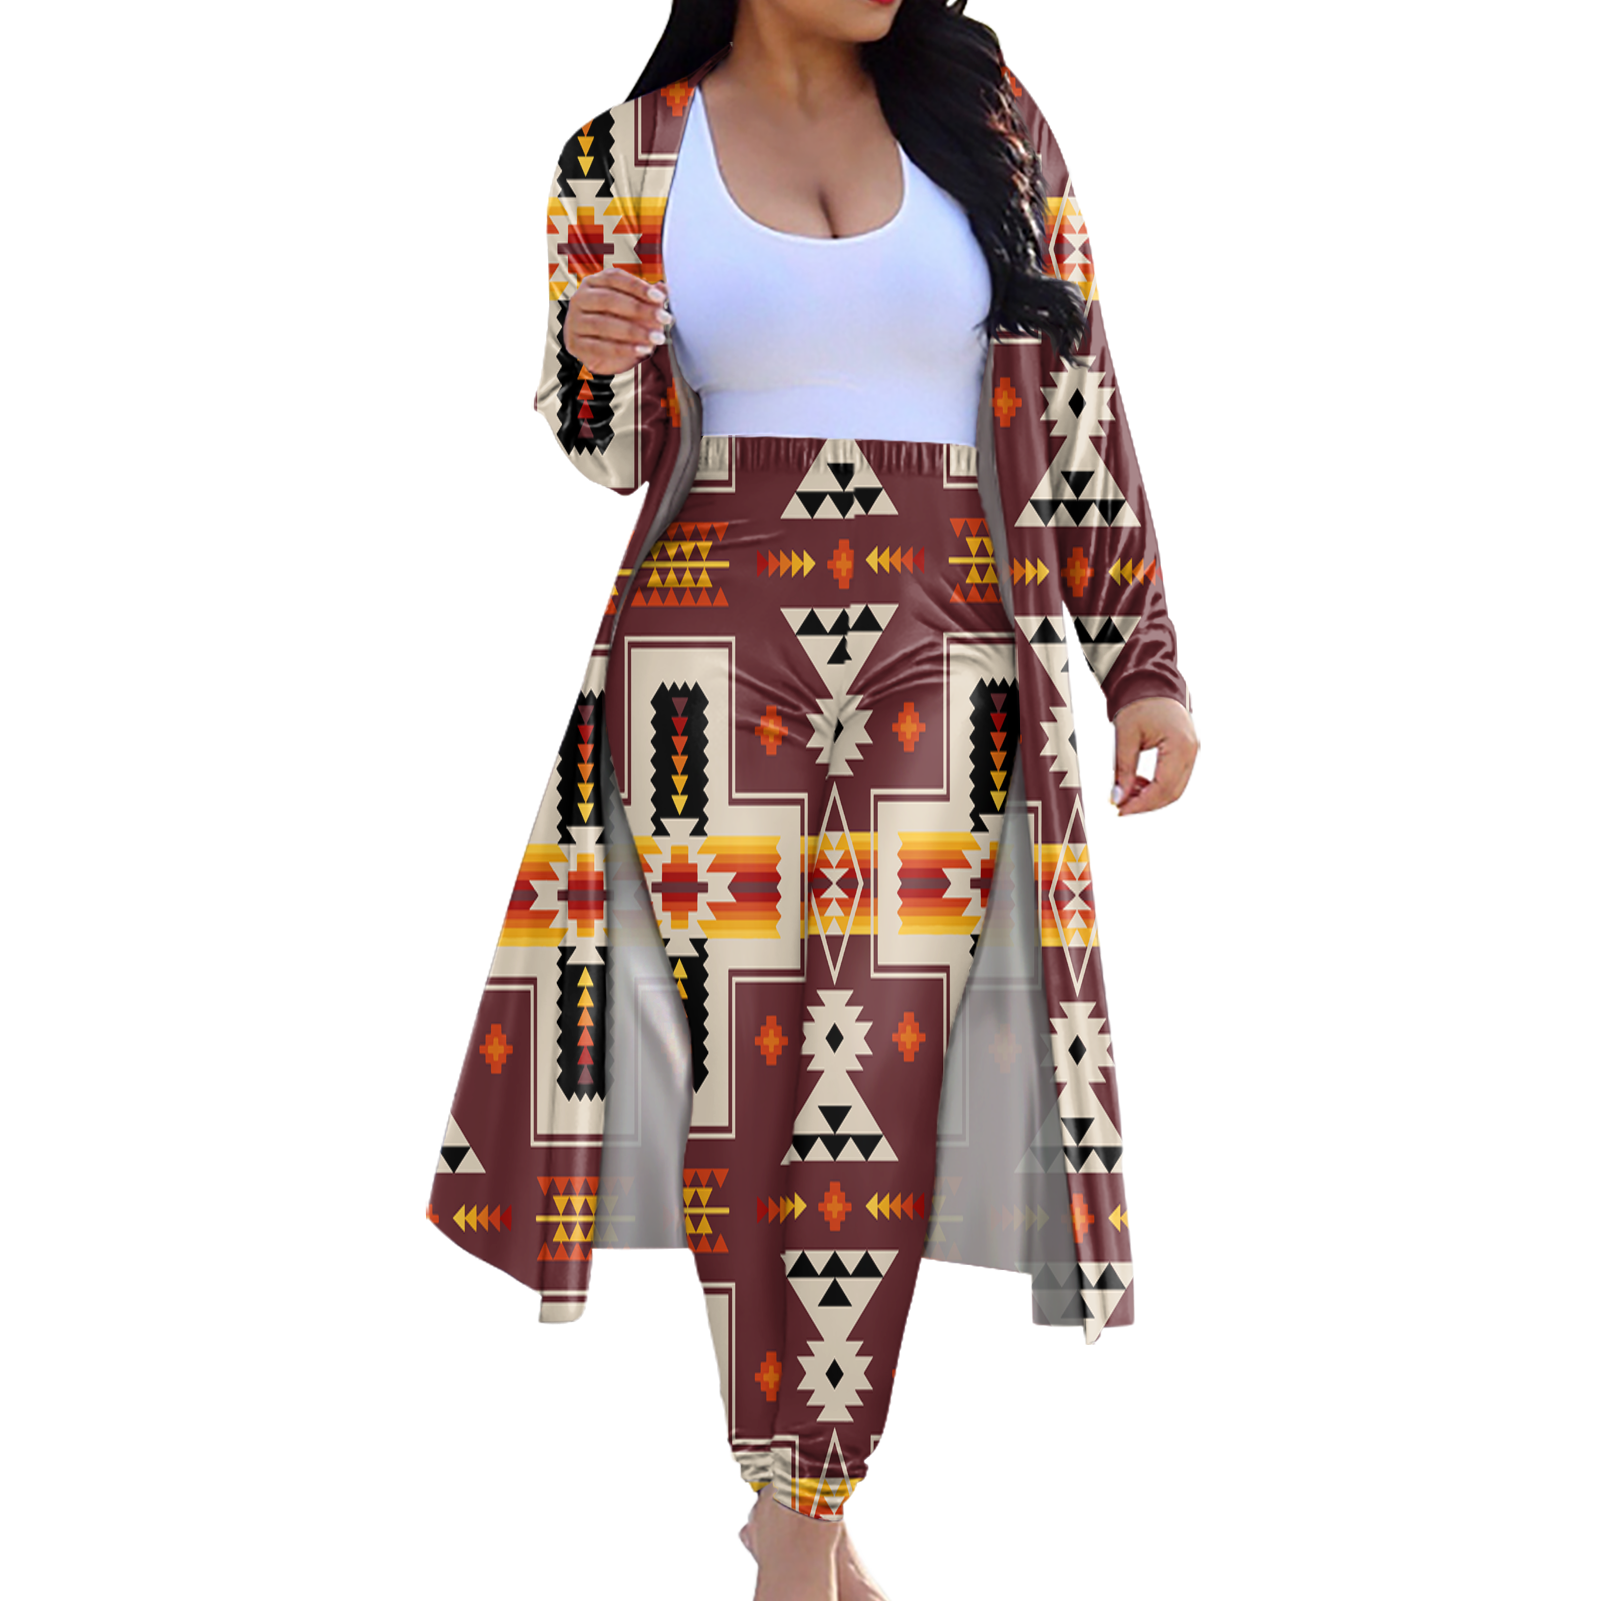 Powwow Storeclp00019 tribe design native american cardigan coat long pant set